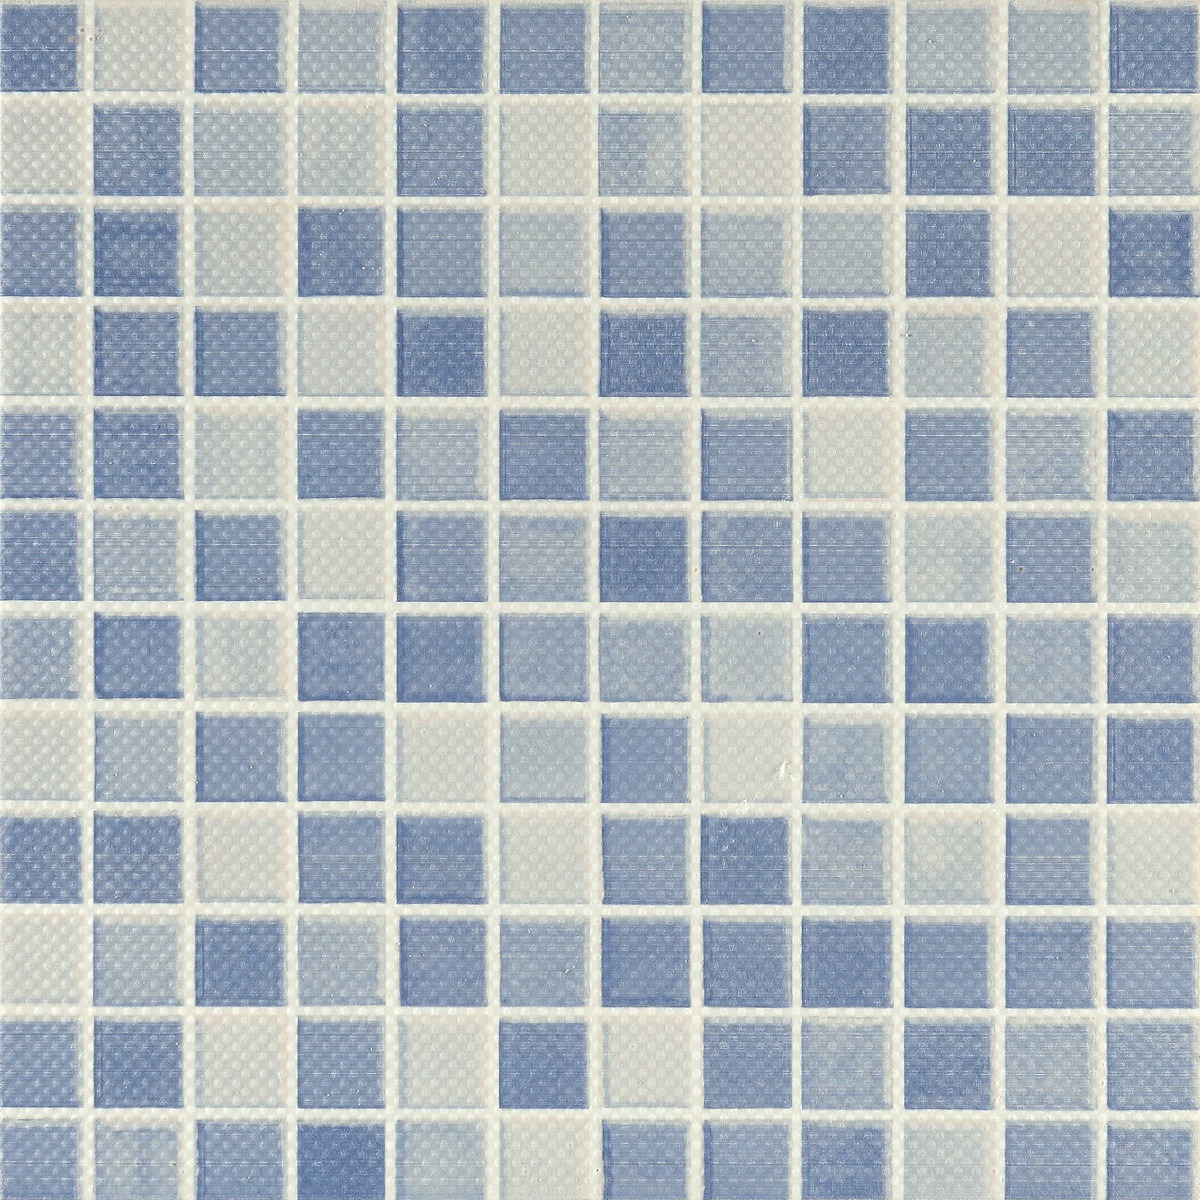 Blue Tiles for Bathroom Tiles, Balcony Tiles, Hospital Tiles, Bar/Restaurant, Commercial/Office, Outdoor/Terrace